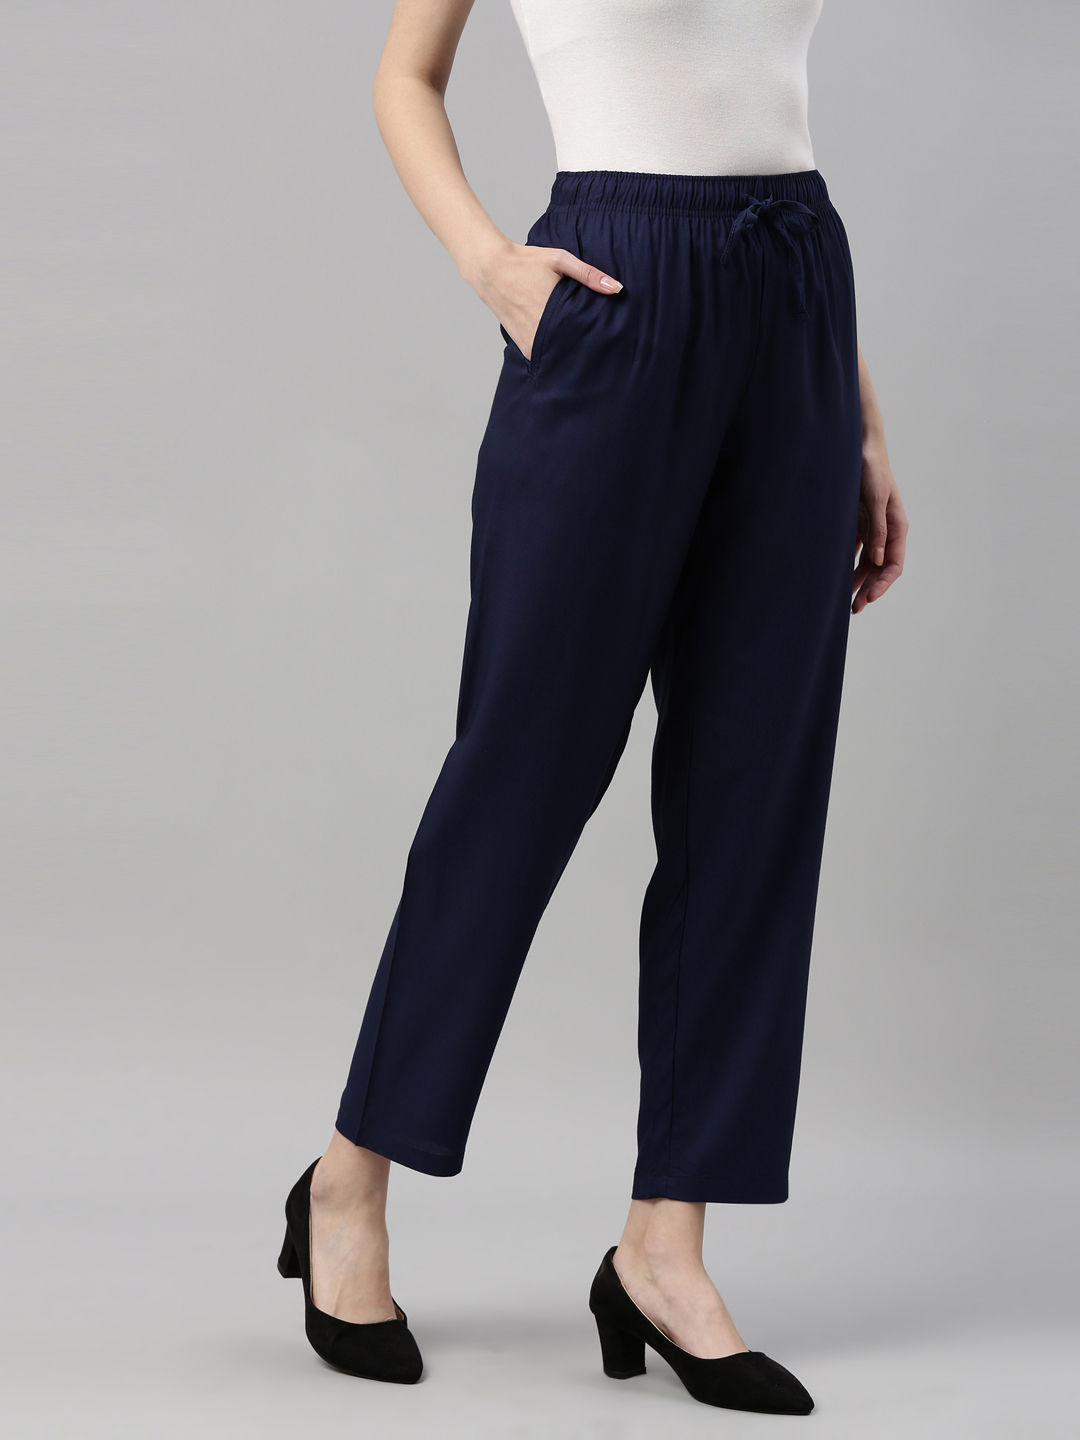 Buy Blue Trousers  Pants for Women by Jaipur Kurti Online  Ajiocom